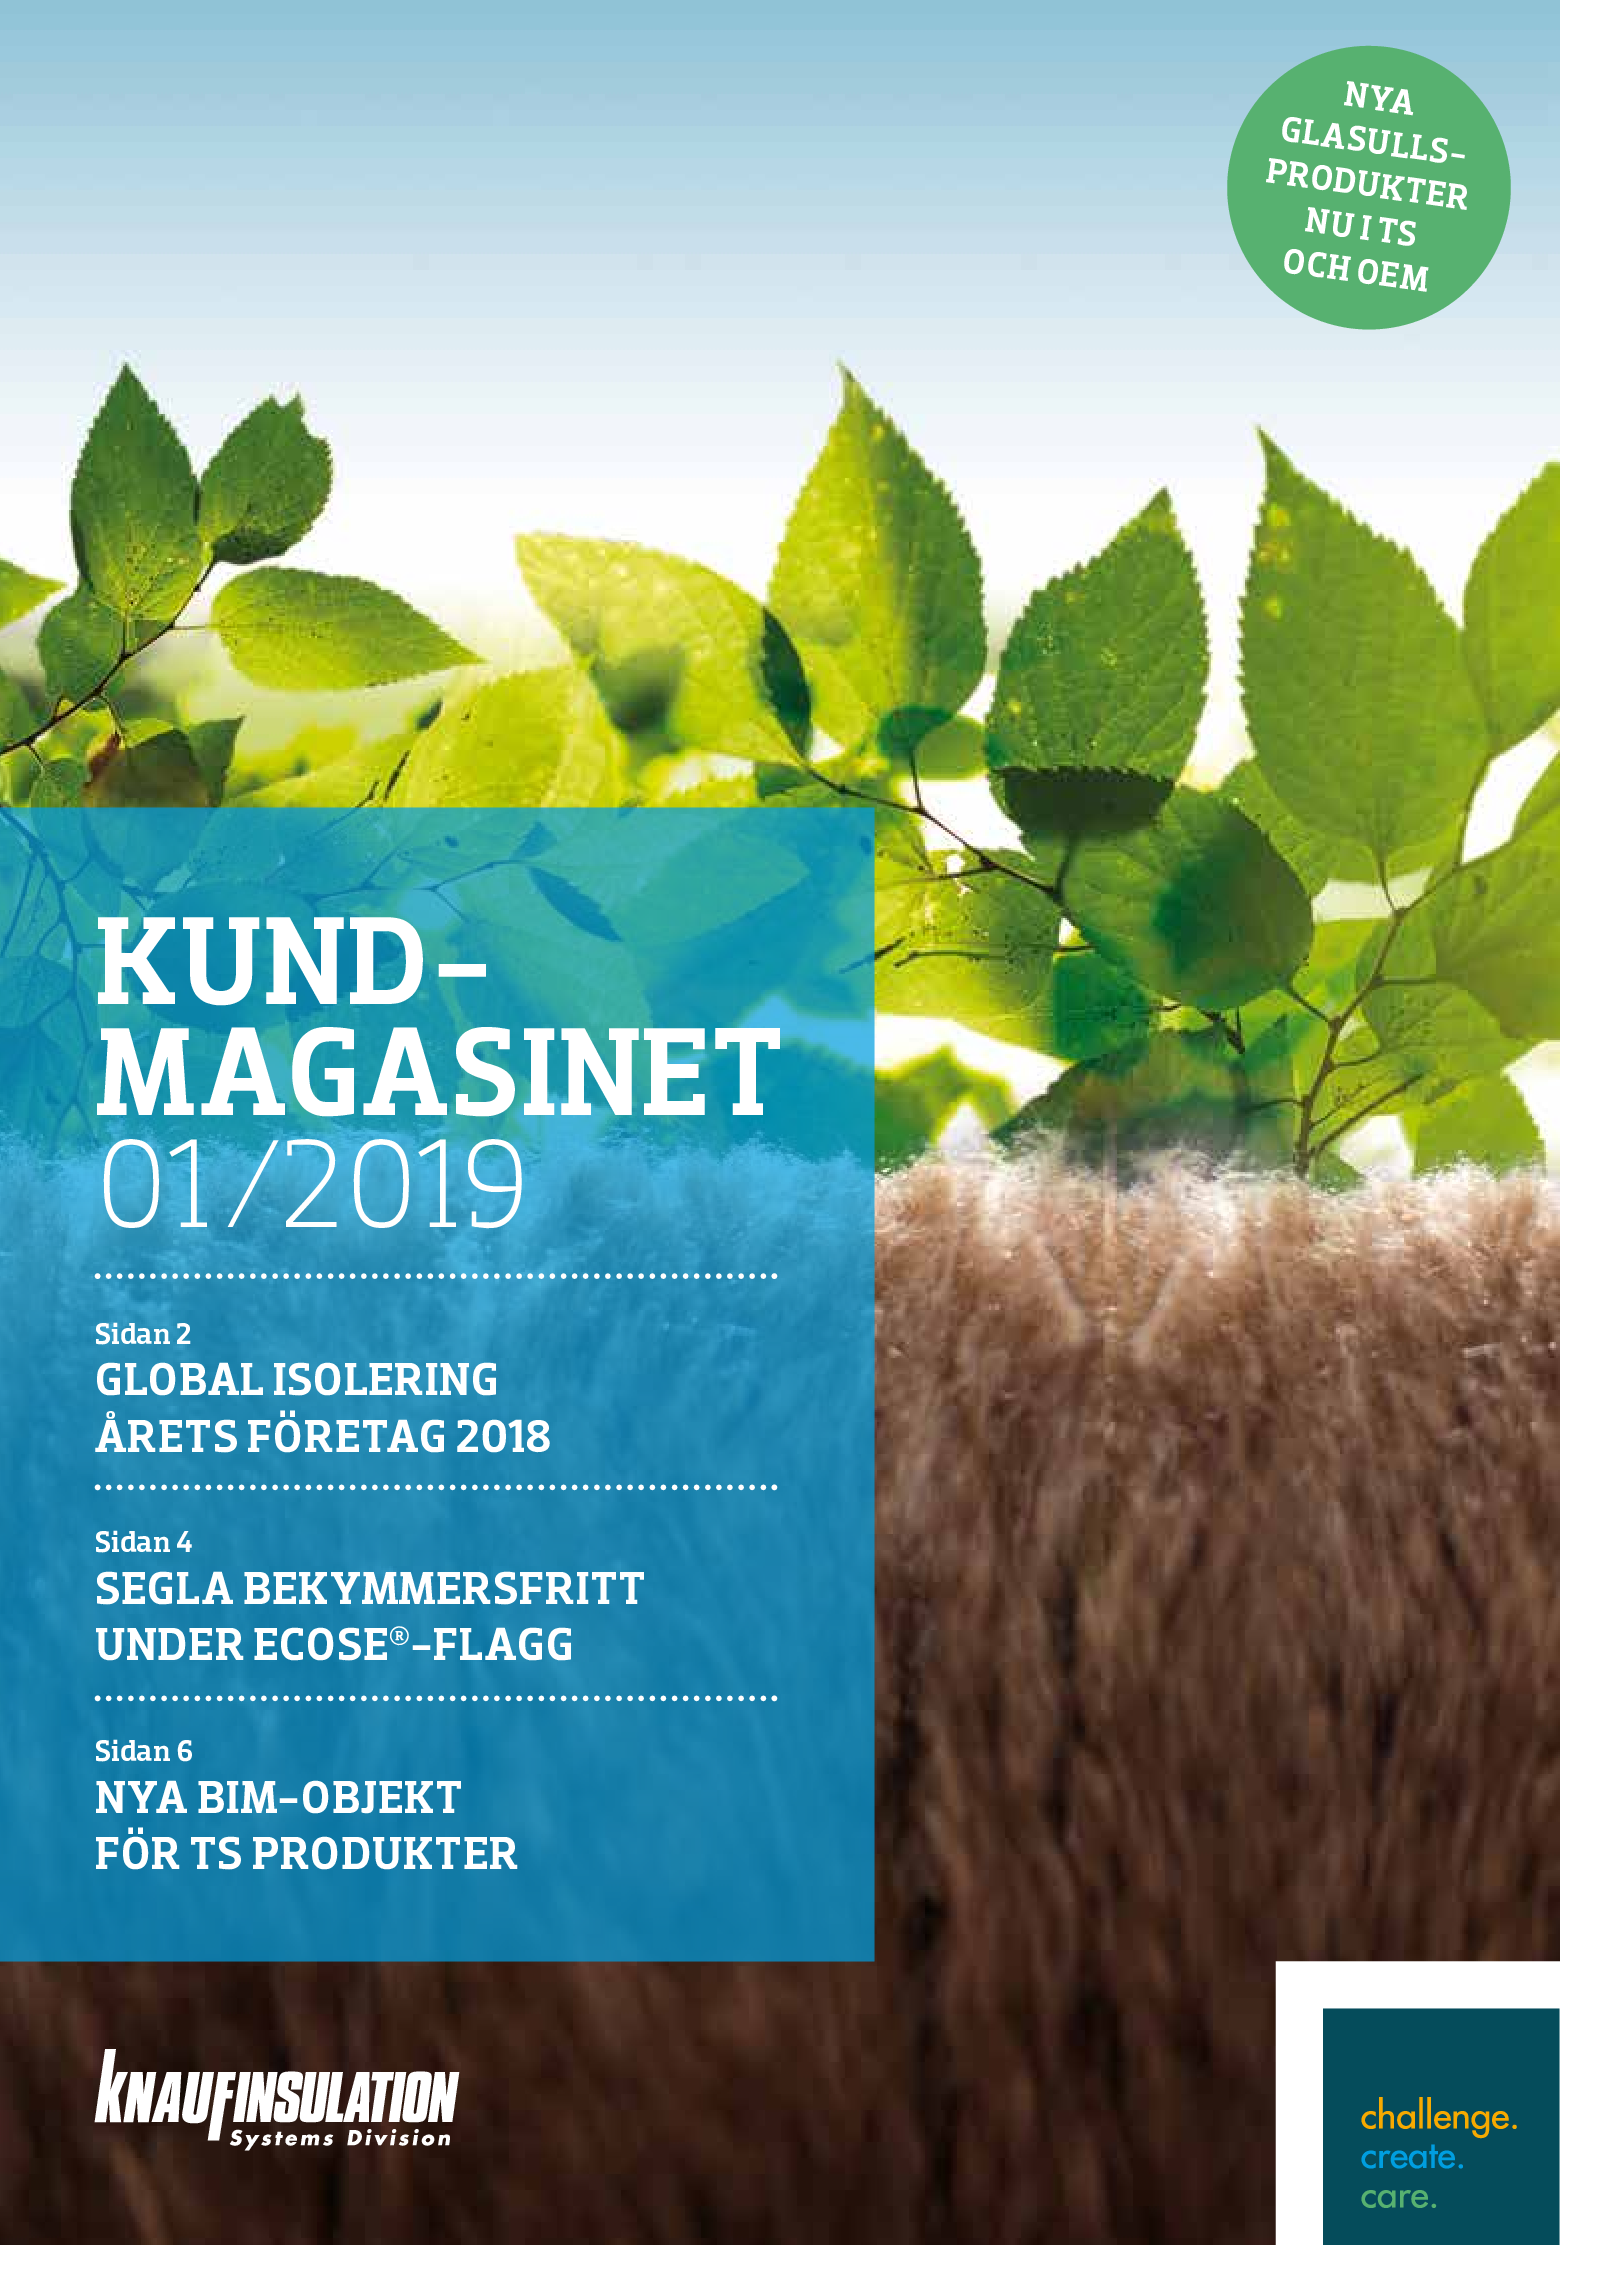 Kund-magasinet _ Knauf Insulation Systems Division 01/2019